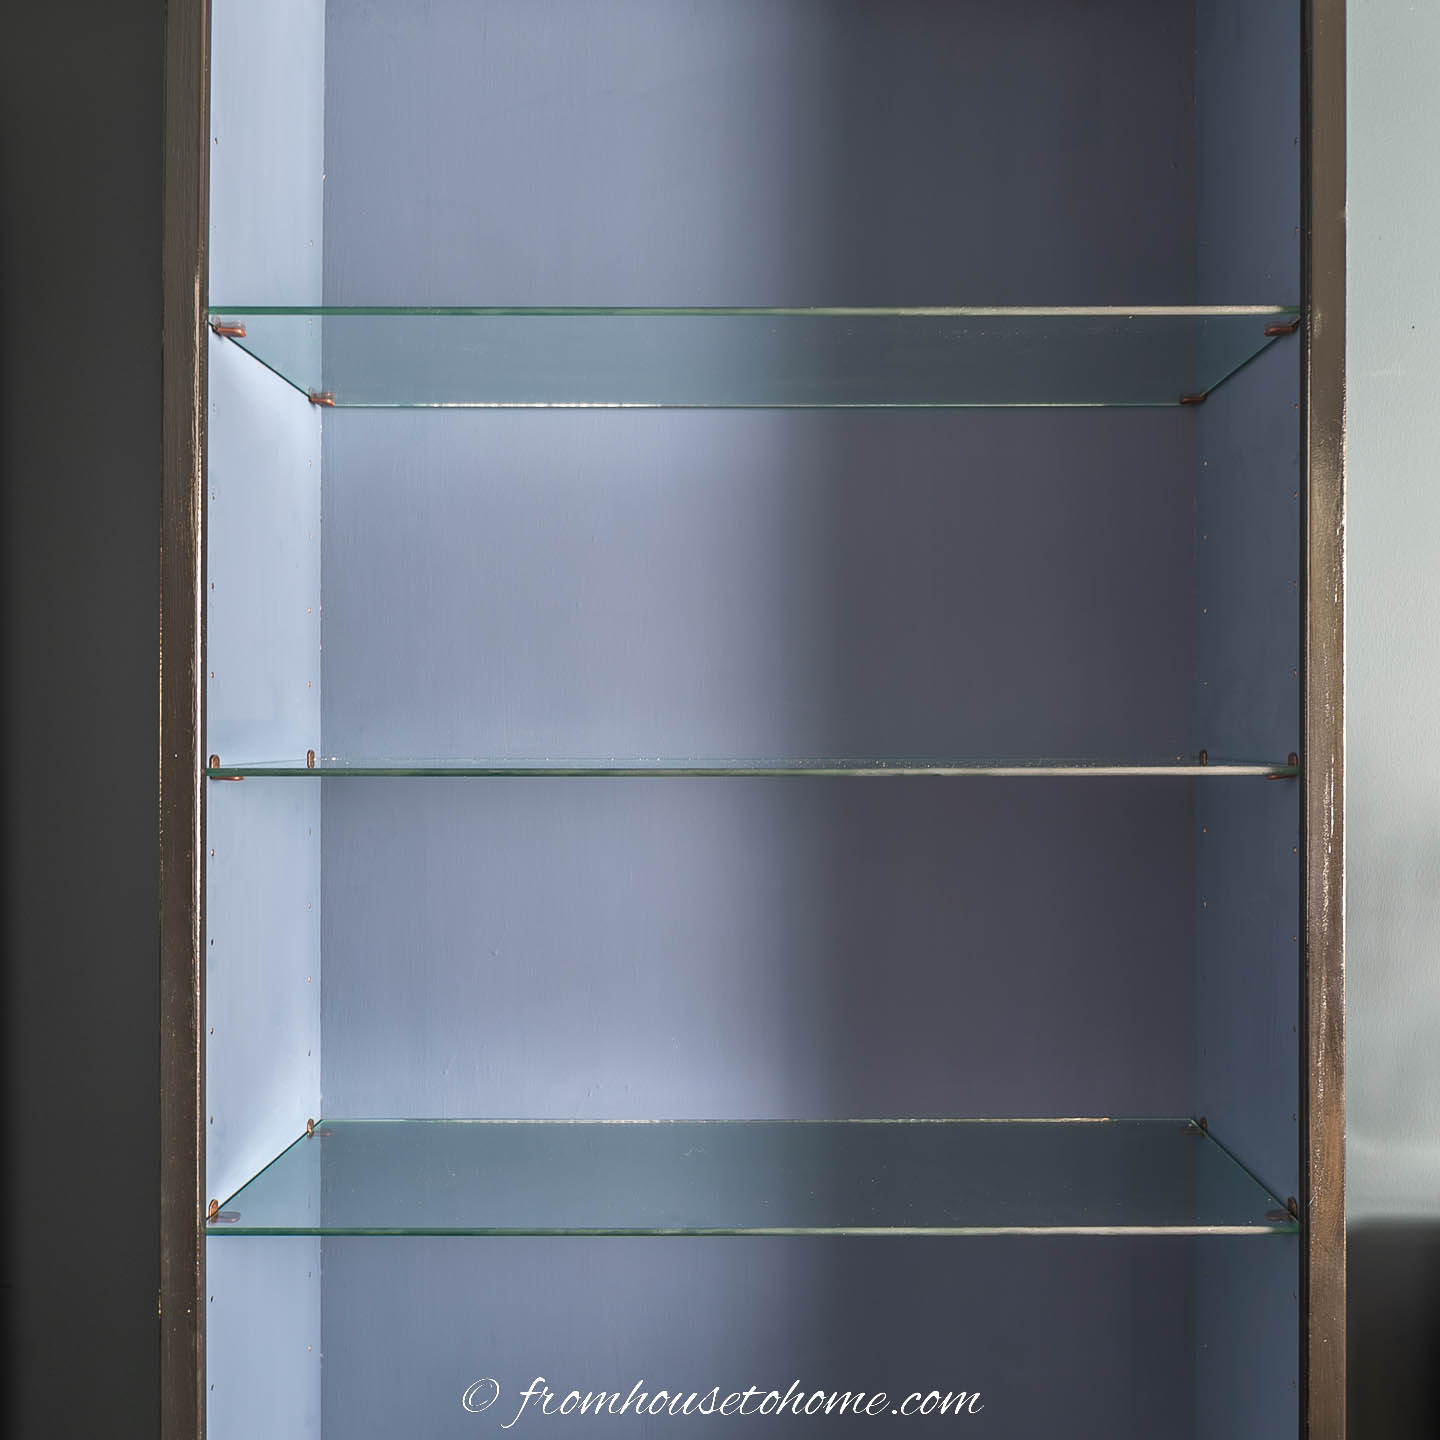 Glass shelves installed in the black and blue bookshelf